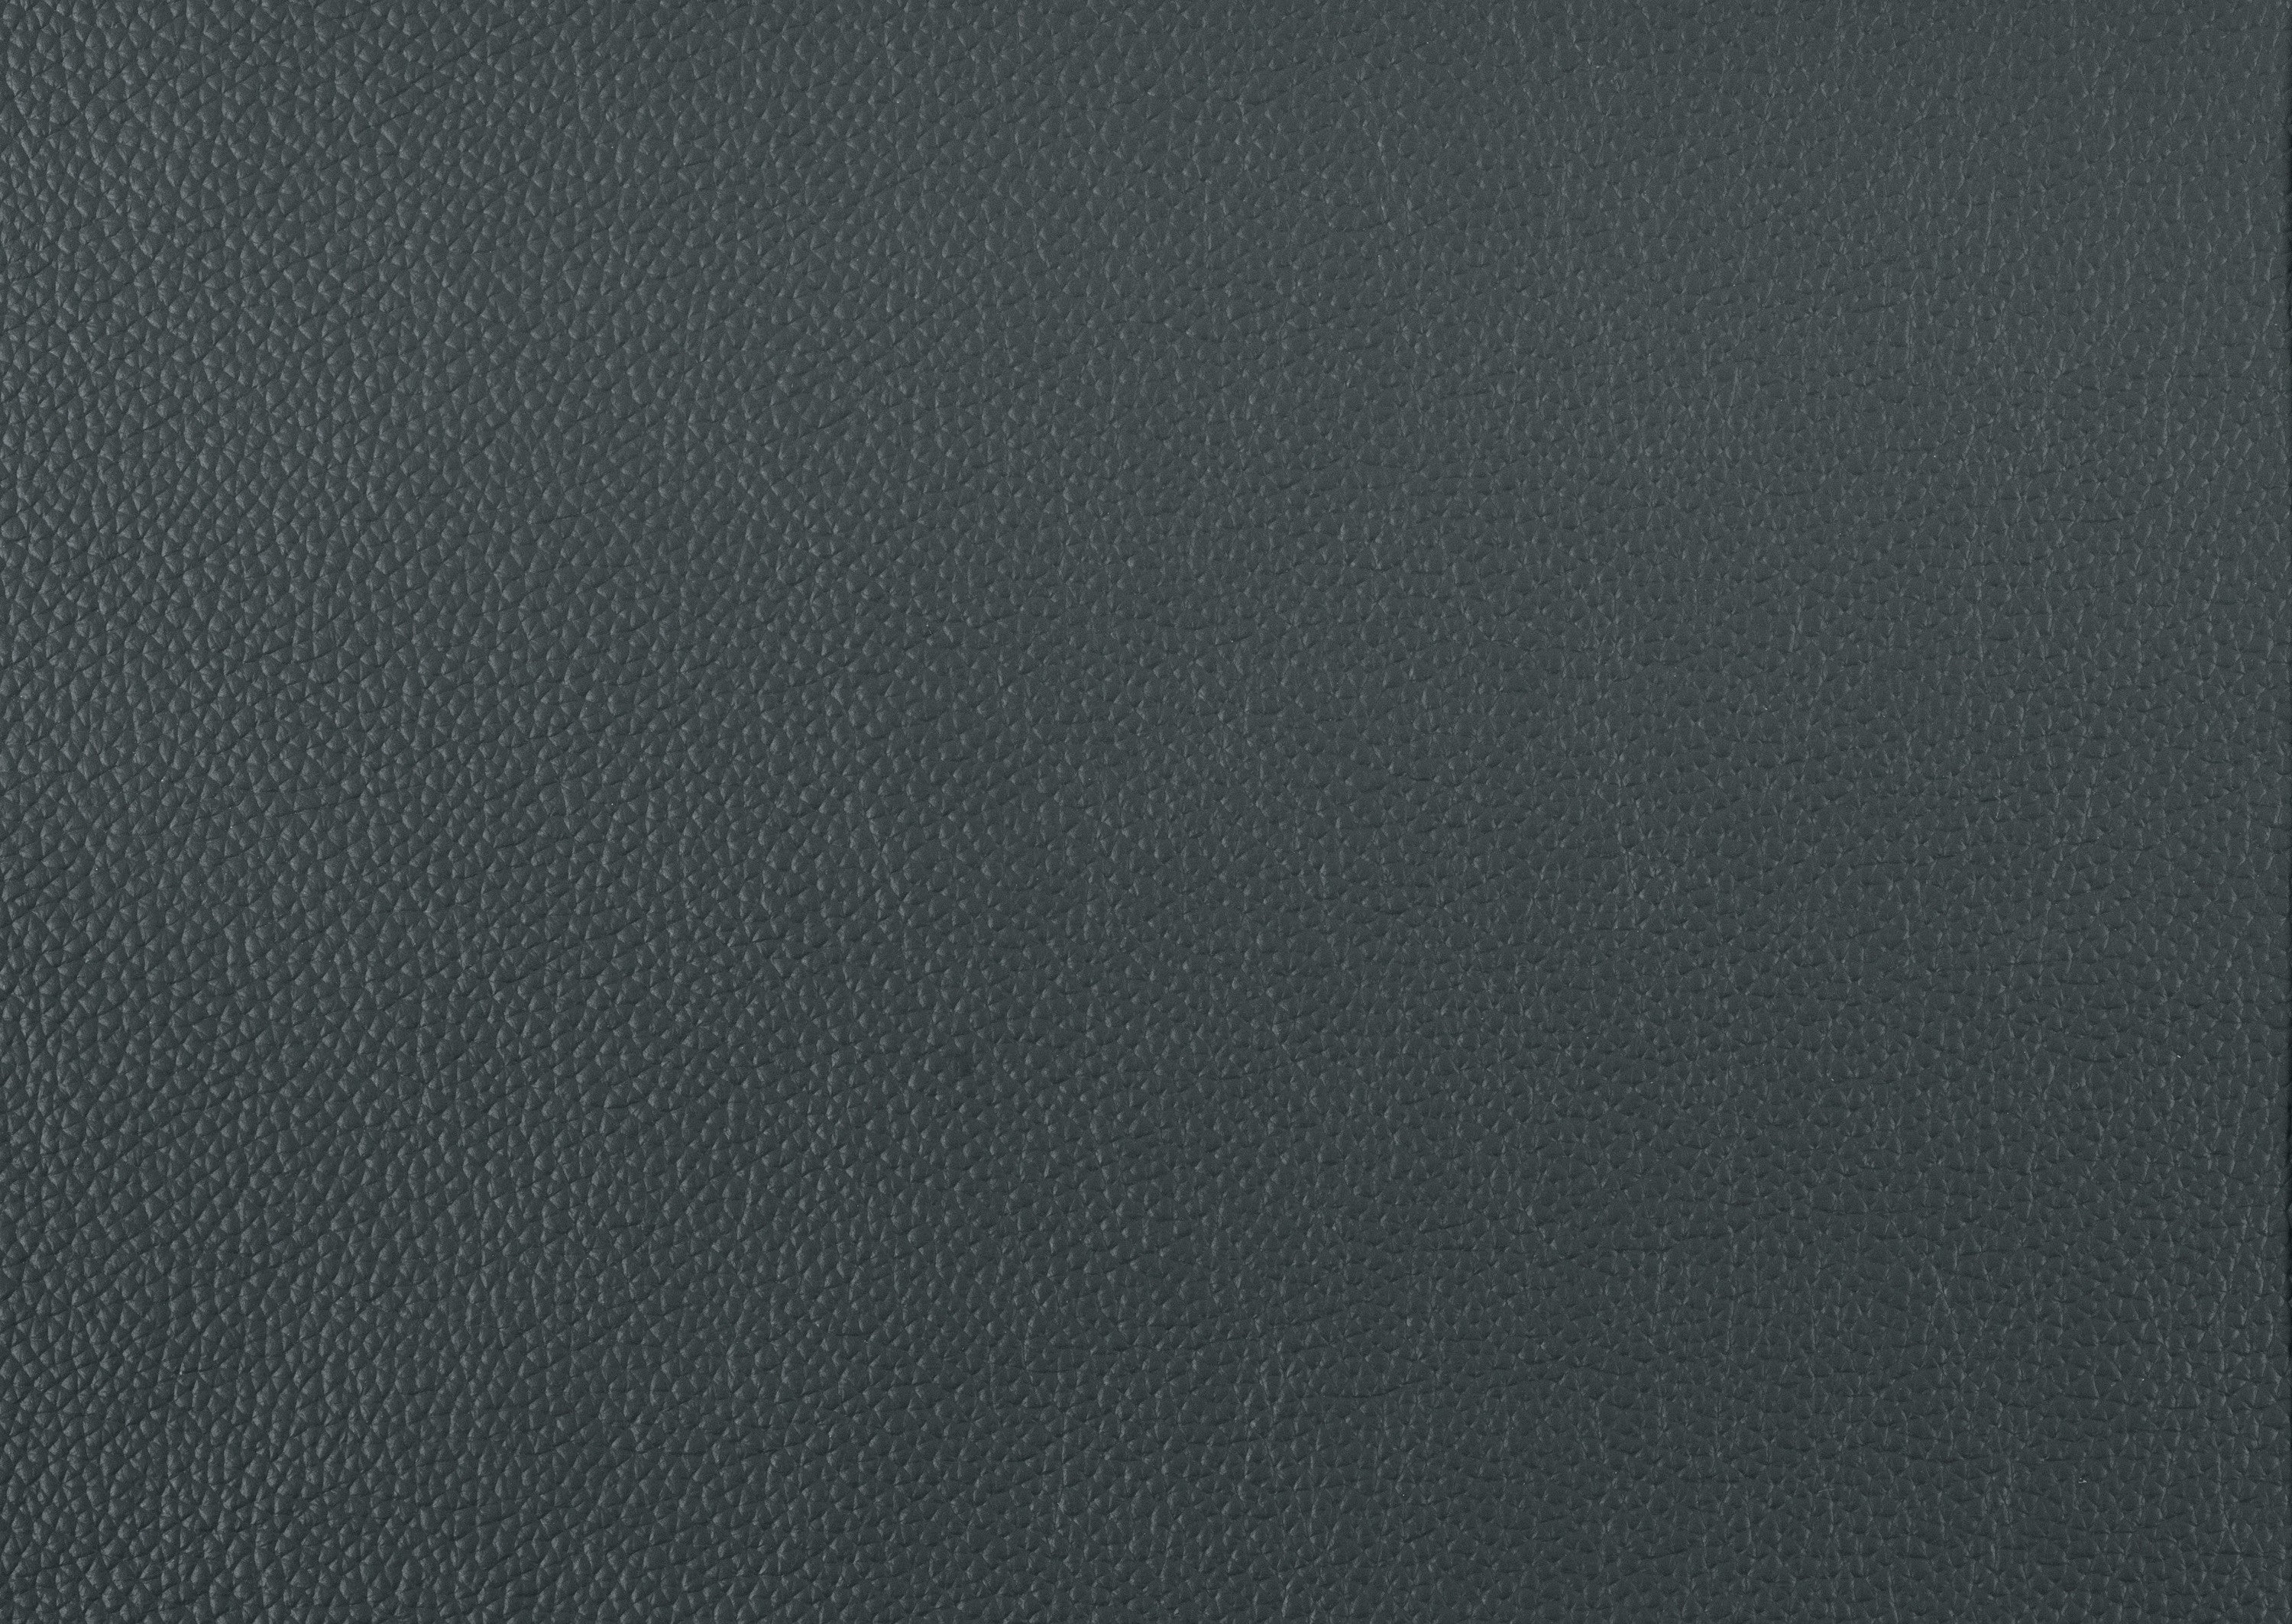 Mischa Dark Gray Top-Grain Leather Loveseat - 9514DGY-2 - Bien Home Furniture &amp; Electronics